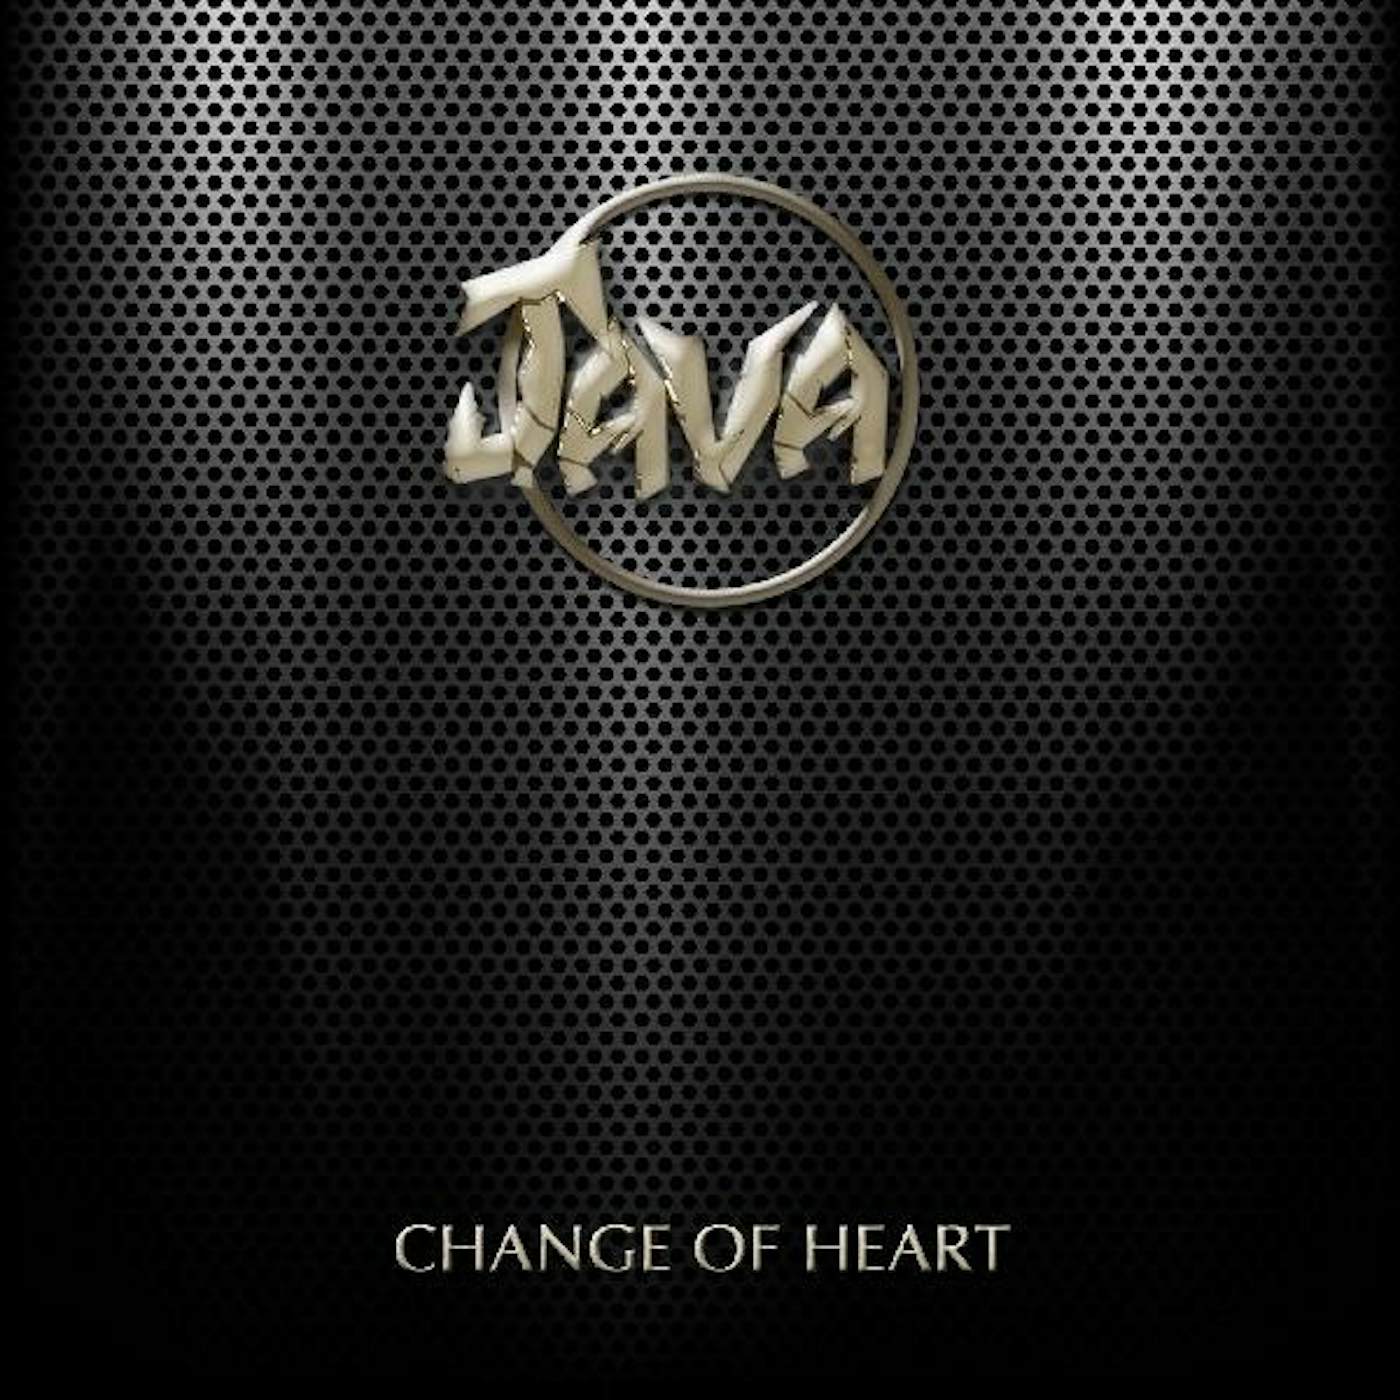 Java CHANGE OF HEART CD